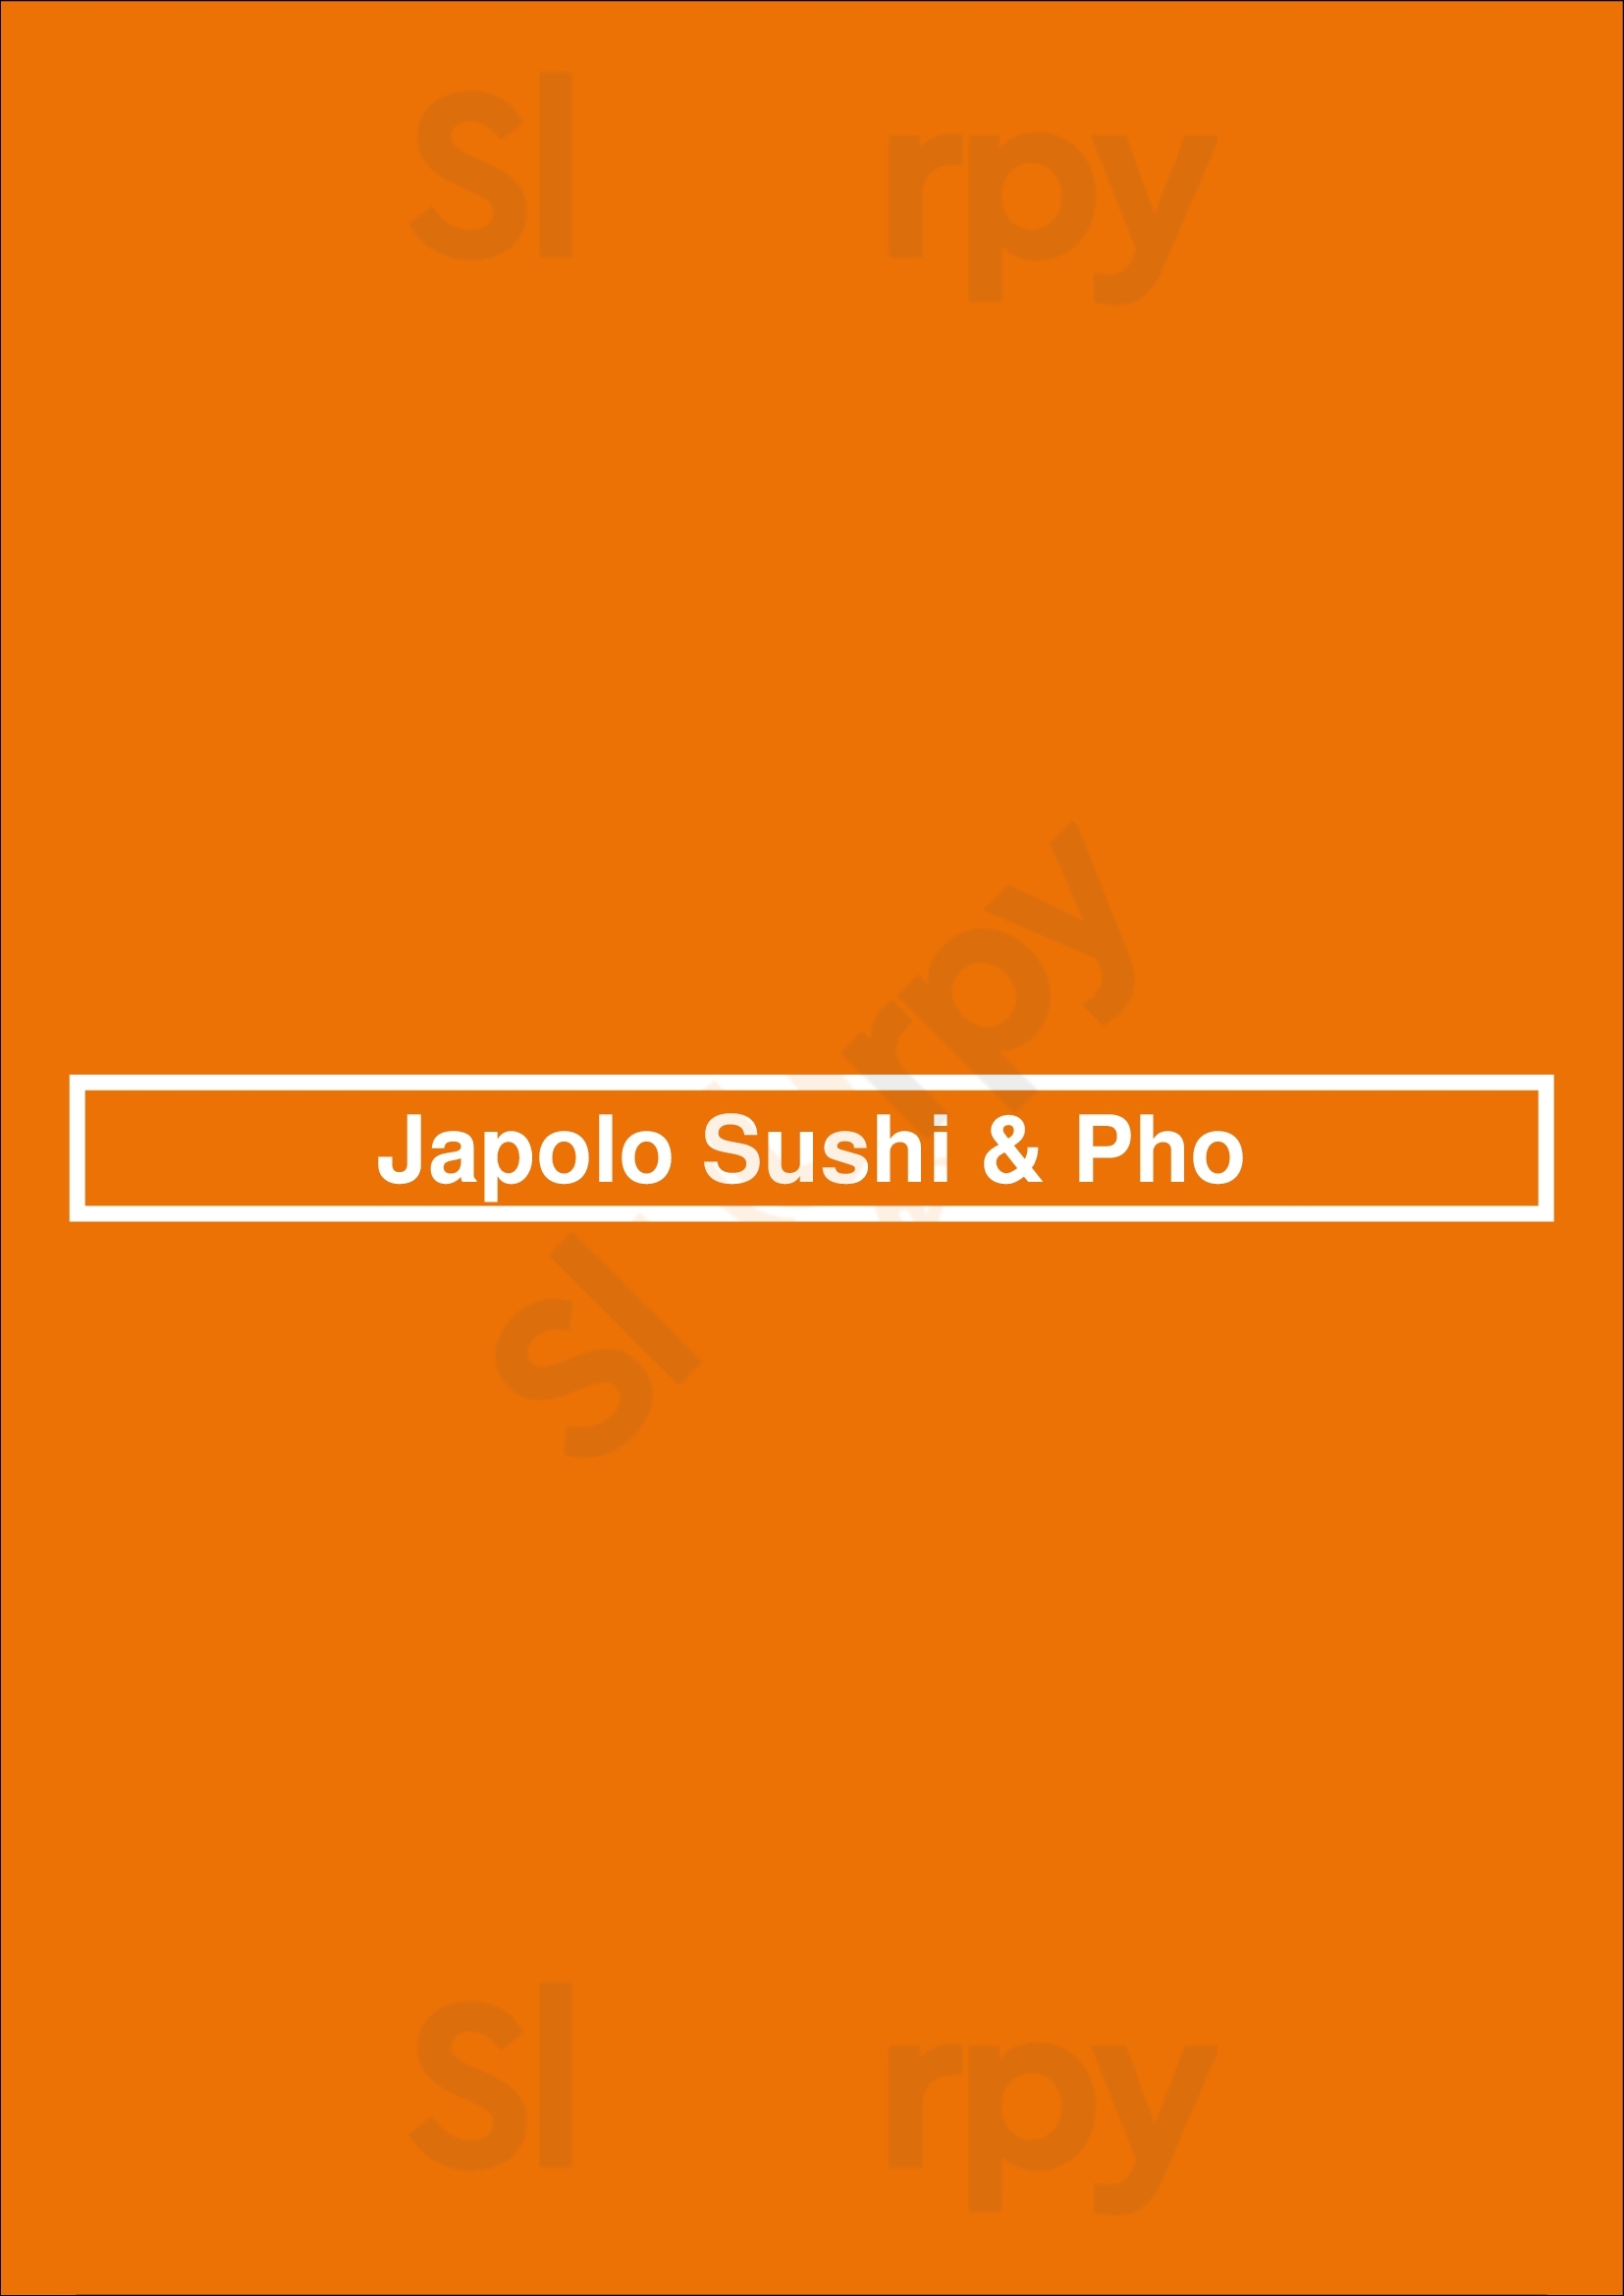 Japolo Sushi & Pho Vancouver Menu - 1